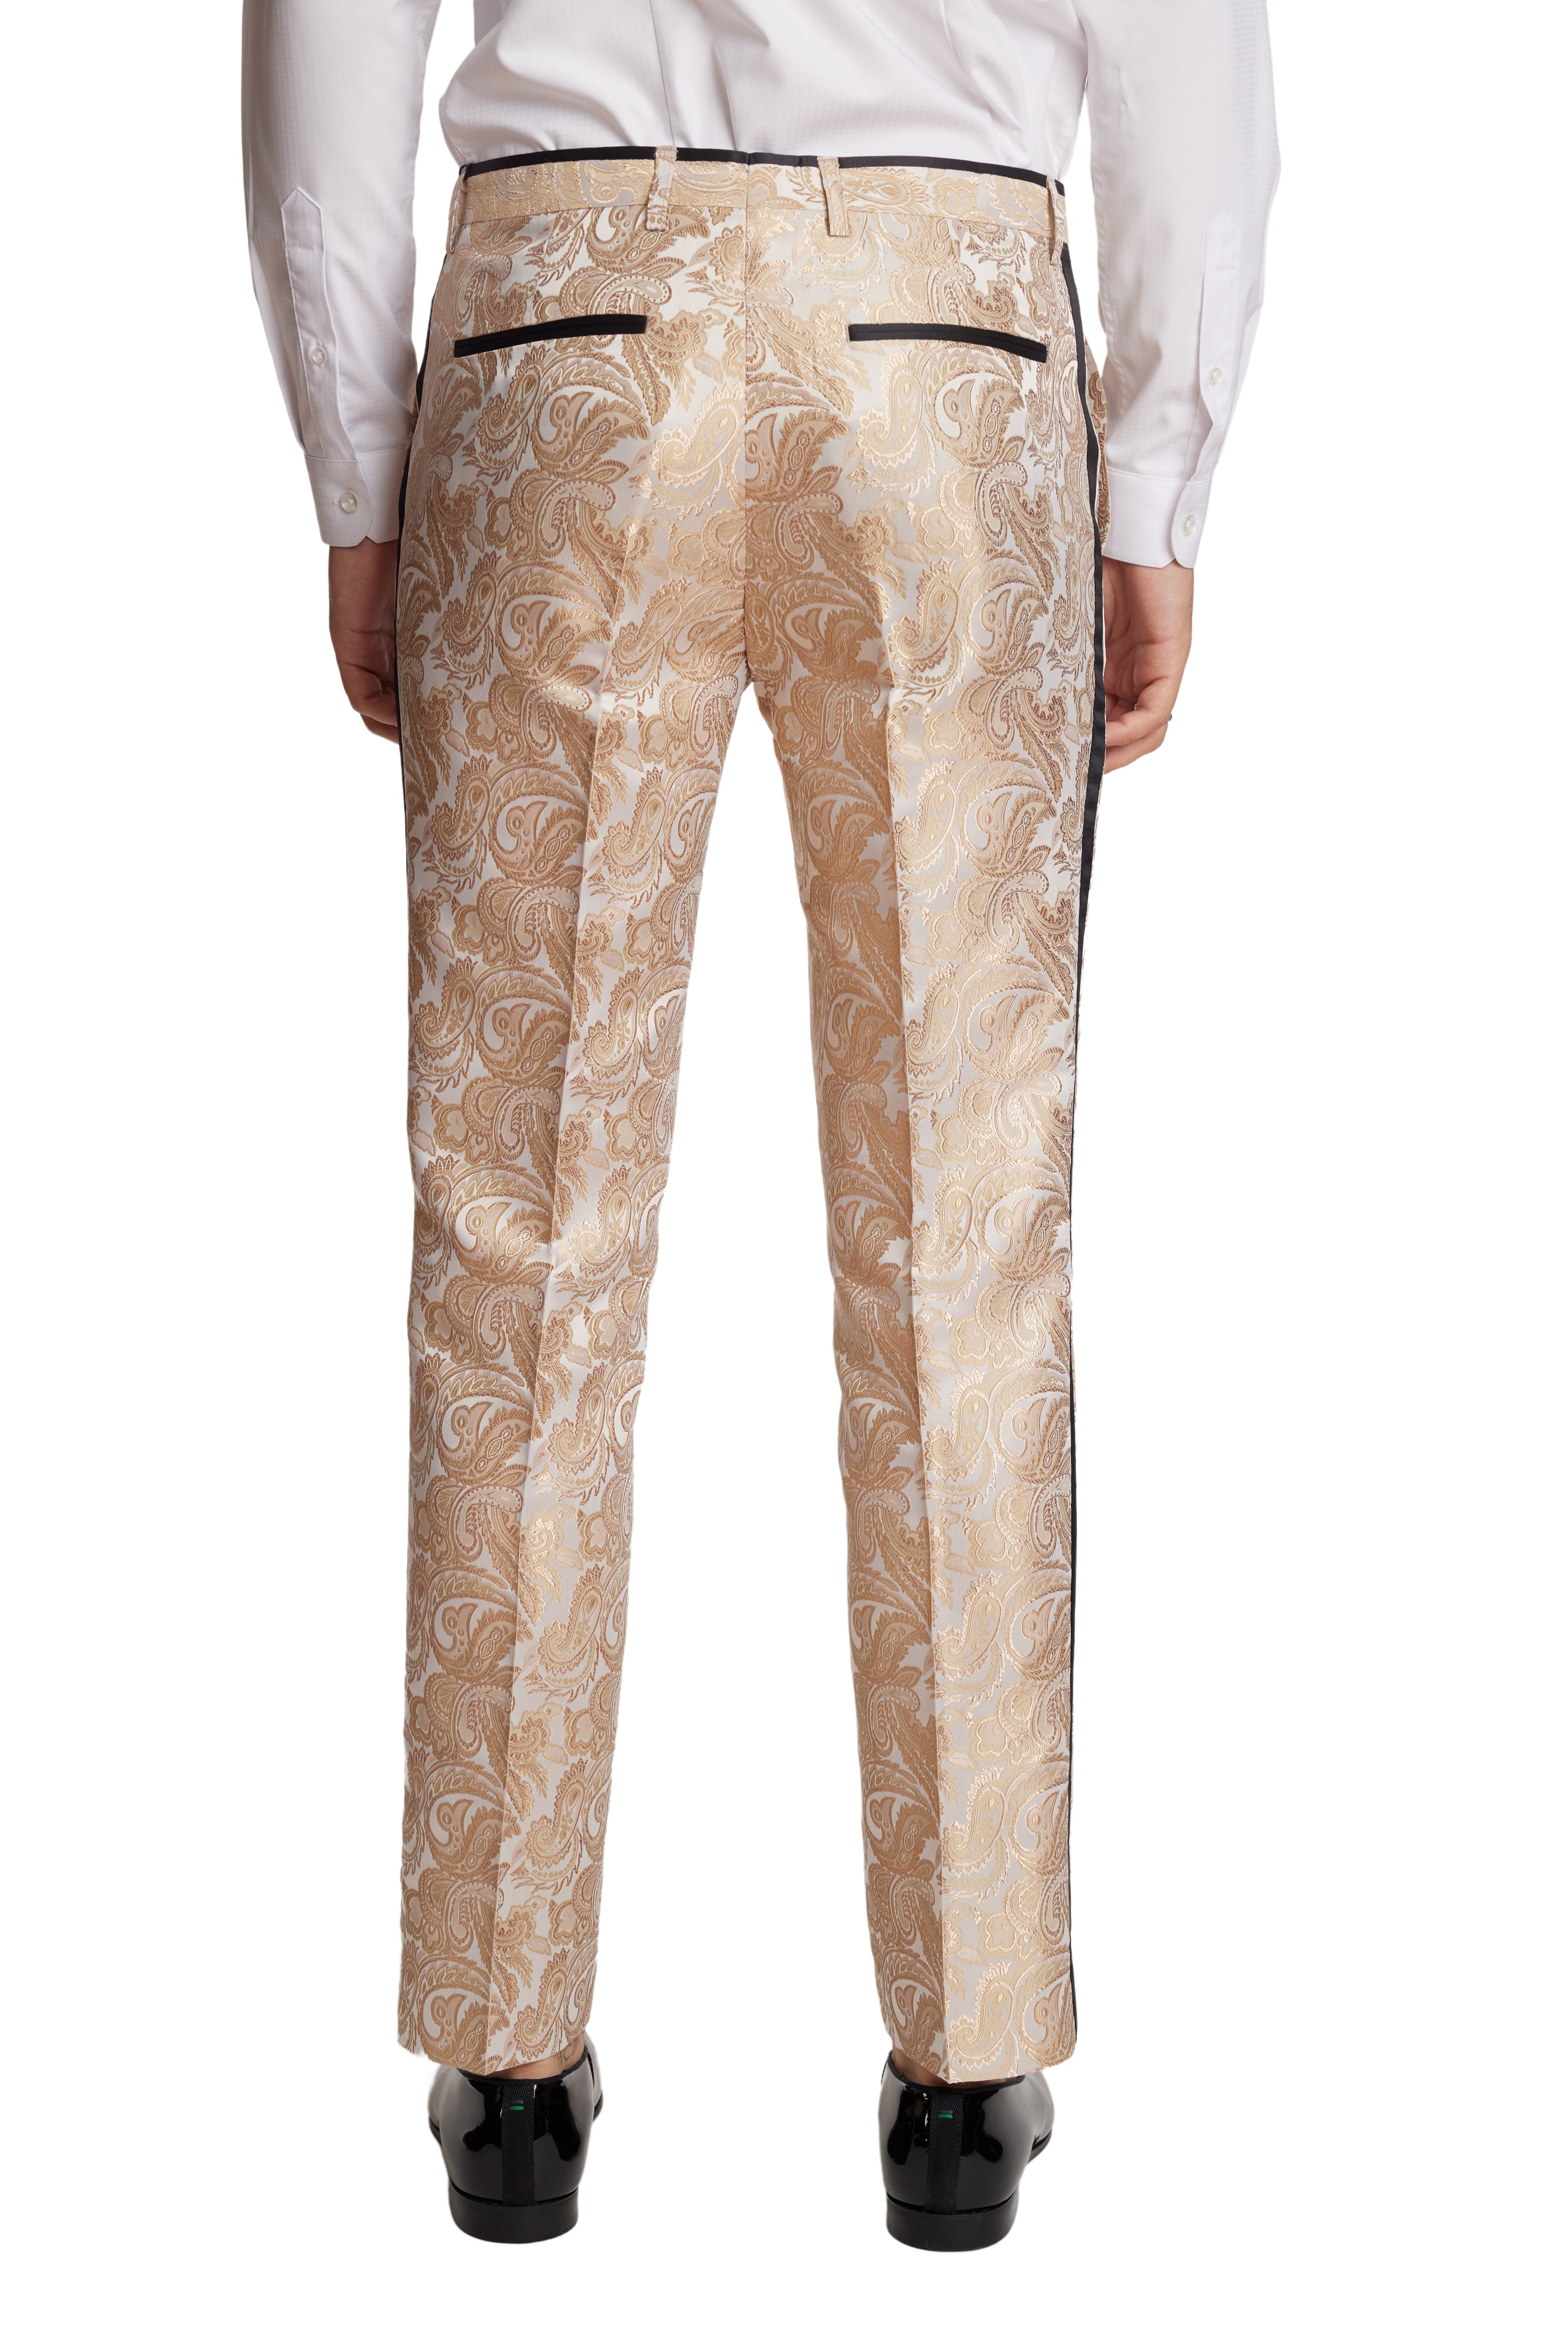 Sloane Tux Pants - slim - Cream Gold Paisley